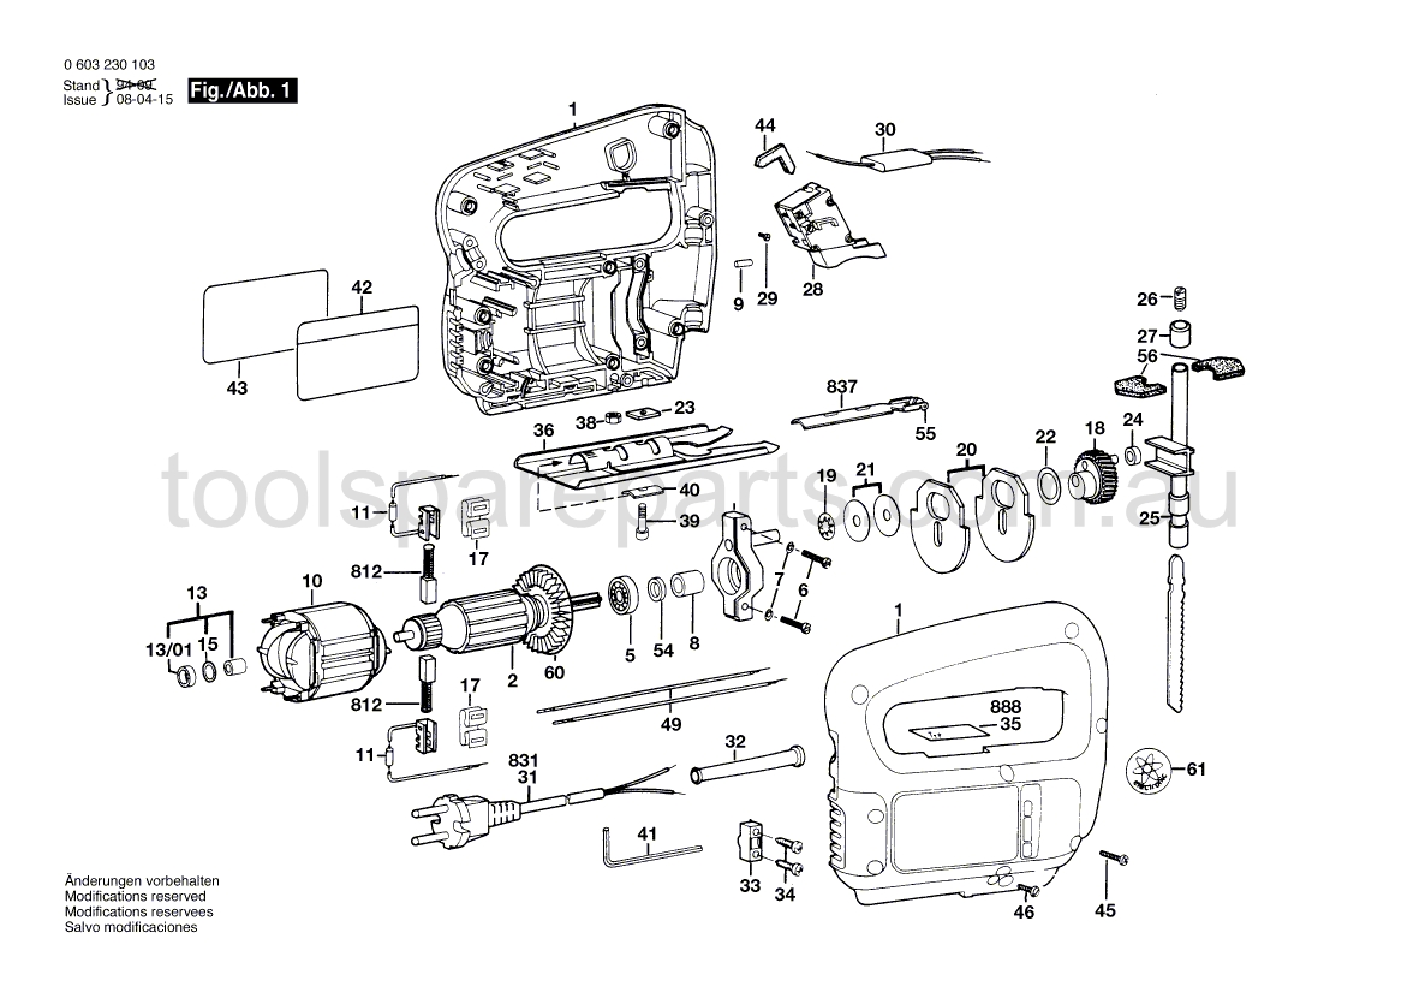 Bosch PST 50 0603230137  Diagram 1